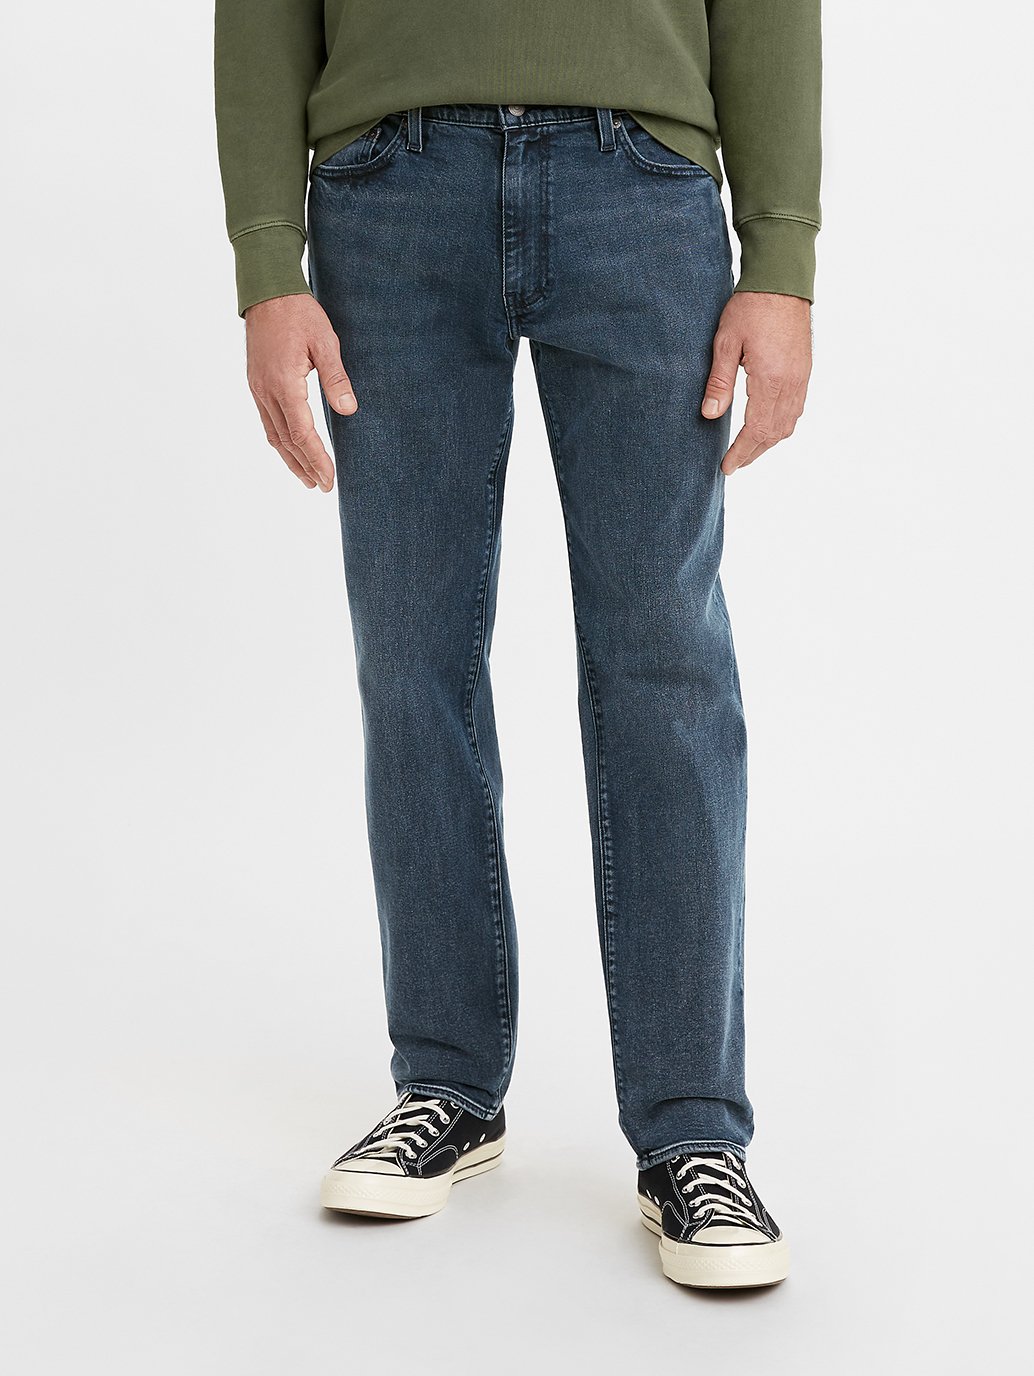 Jeans for Men - Buy Mens Skinny, Ripped, Slim Fit Denim Jeans-nextbuild.com.vn